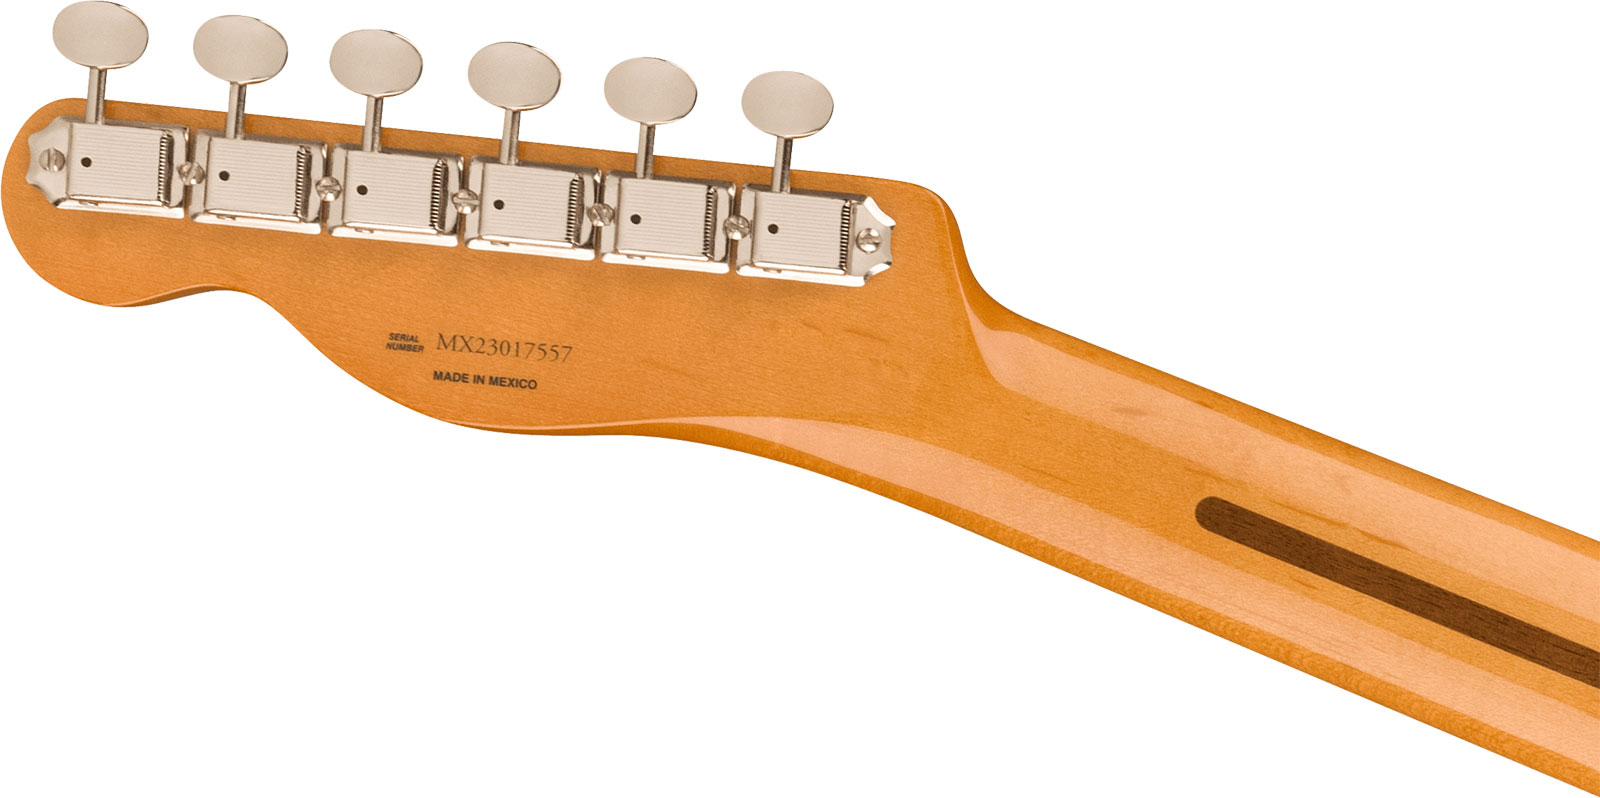 Fender Tele Nocaster 50s Vintera 2 Mex 2s Ht Mn - 2-color Sunburst - Tel shape electric guitar - Variation 3